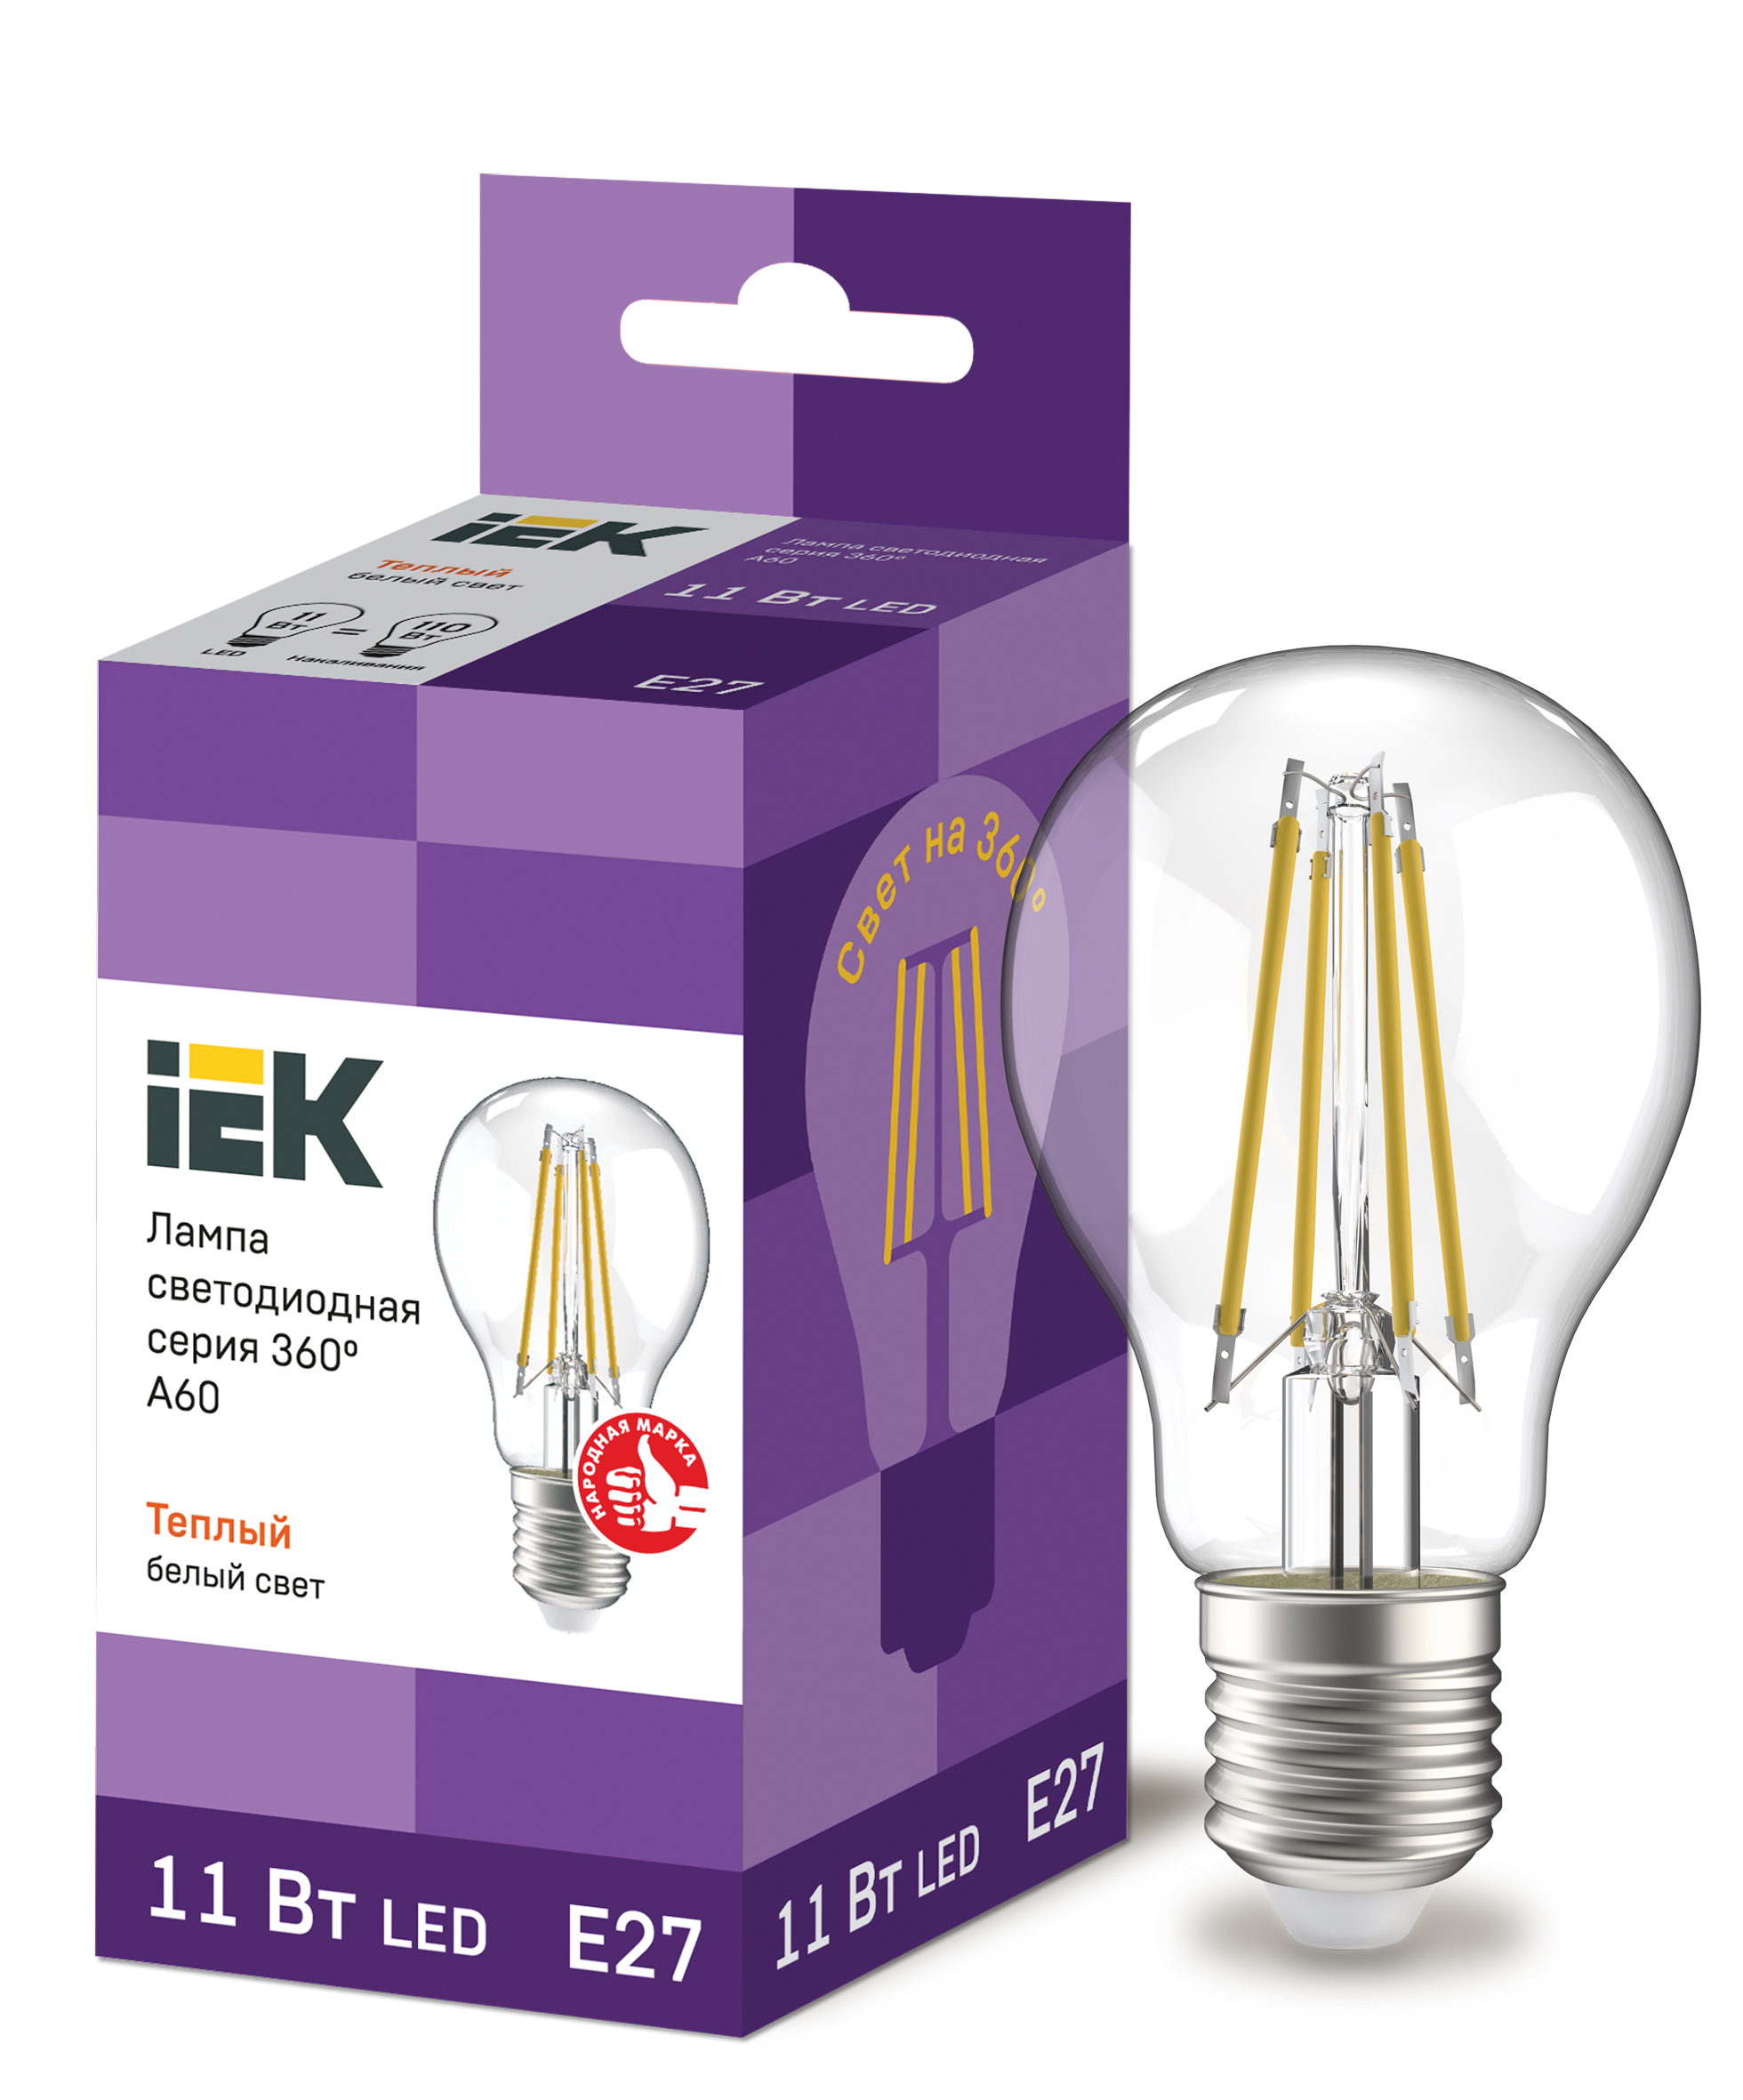 IEK Лампа LED A60 шар прозрачный 11Вт 230В 3000К E27 серия 360°